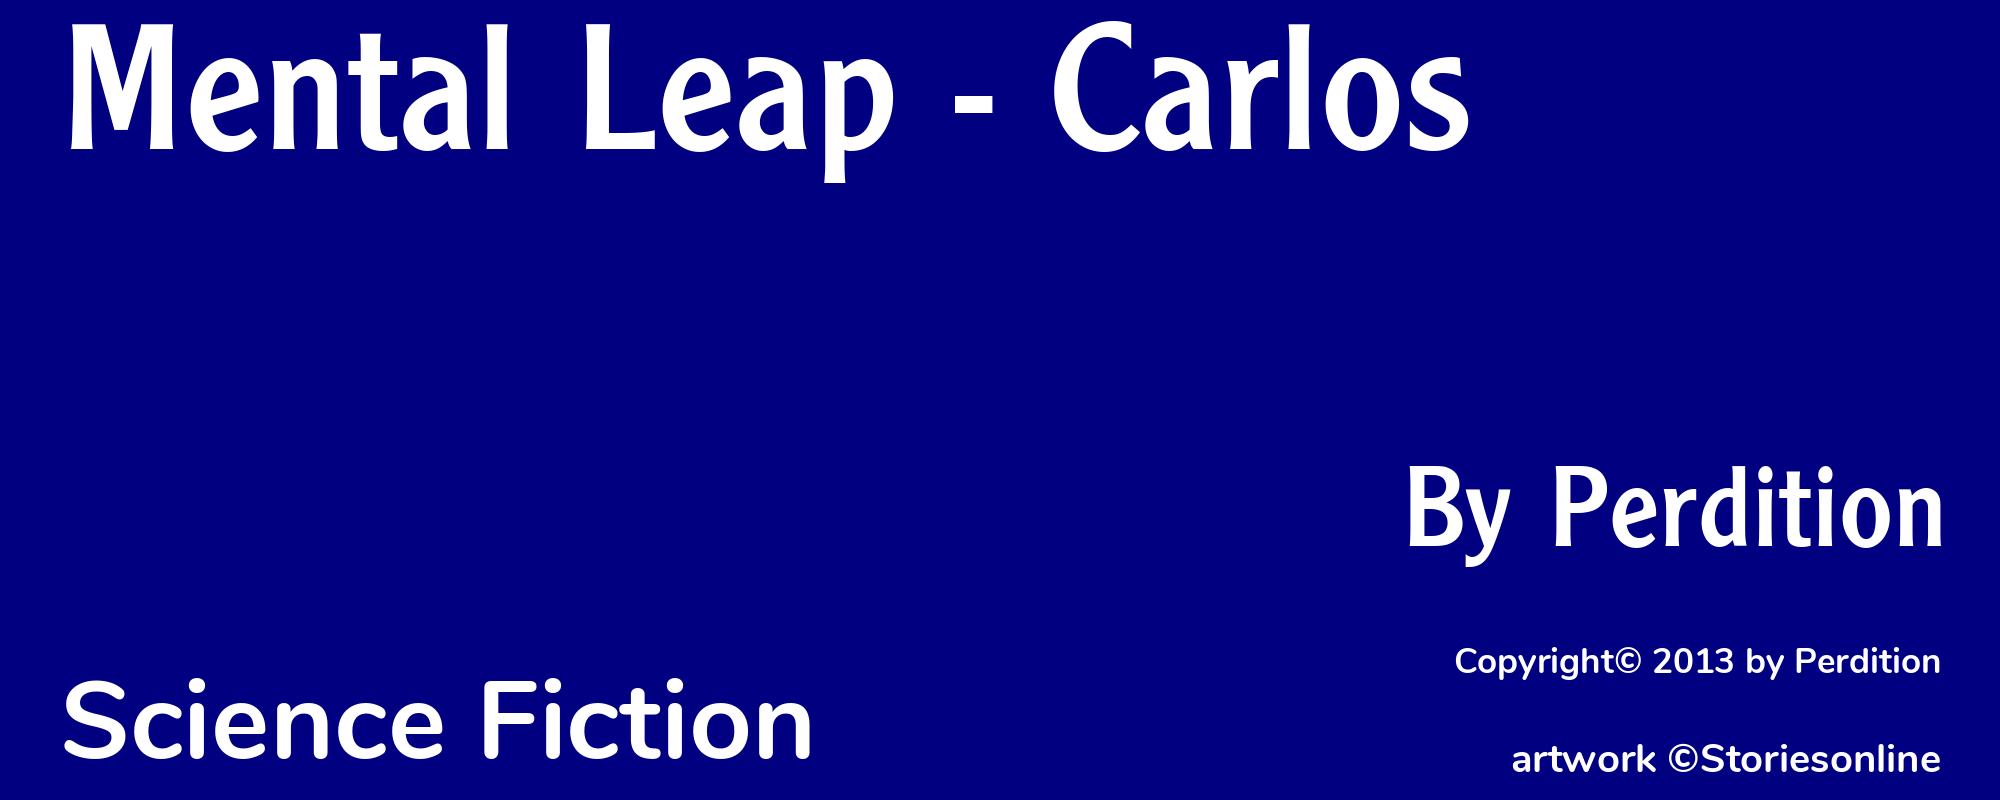 Mental Leap - Carlos - Cover